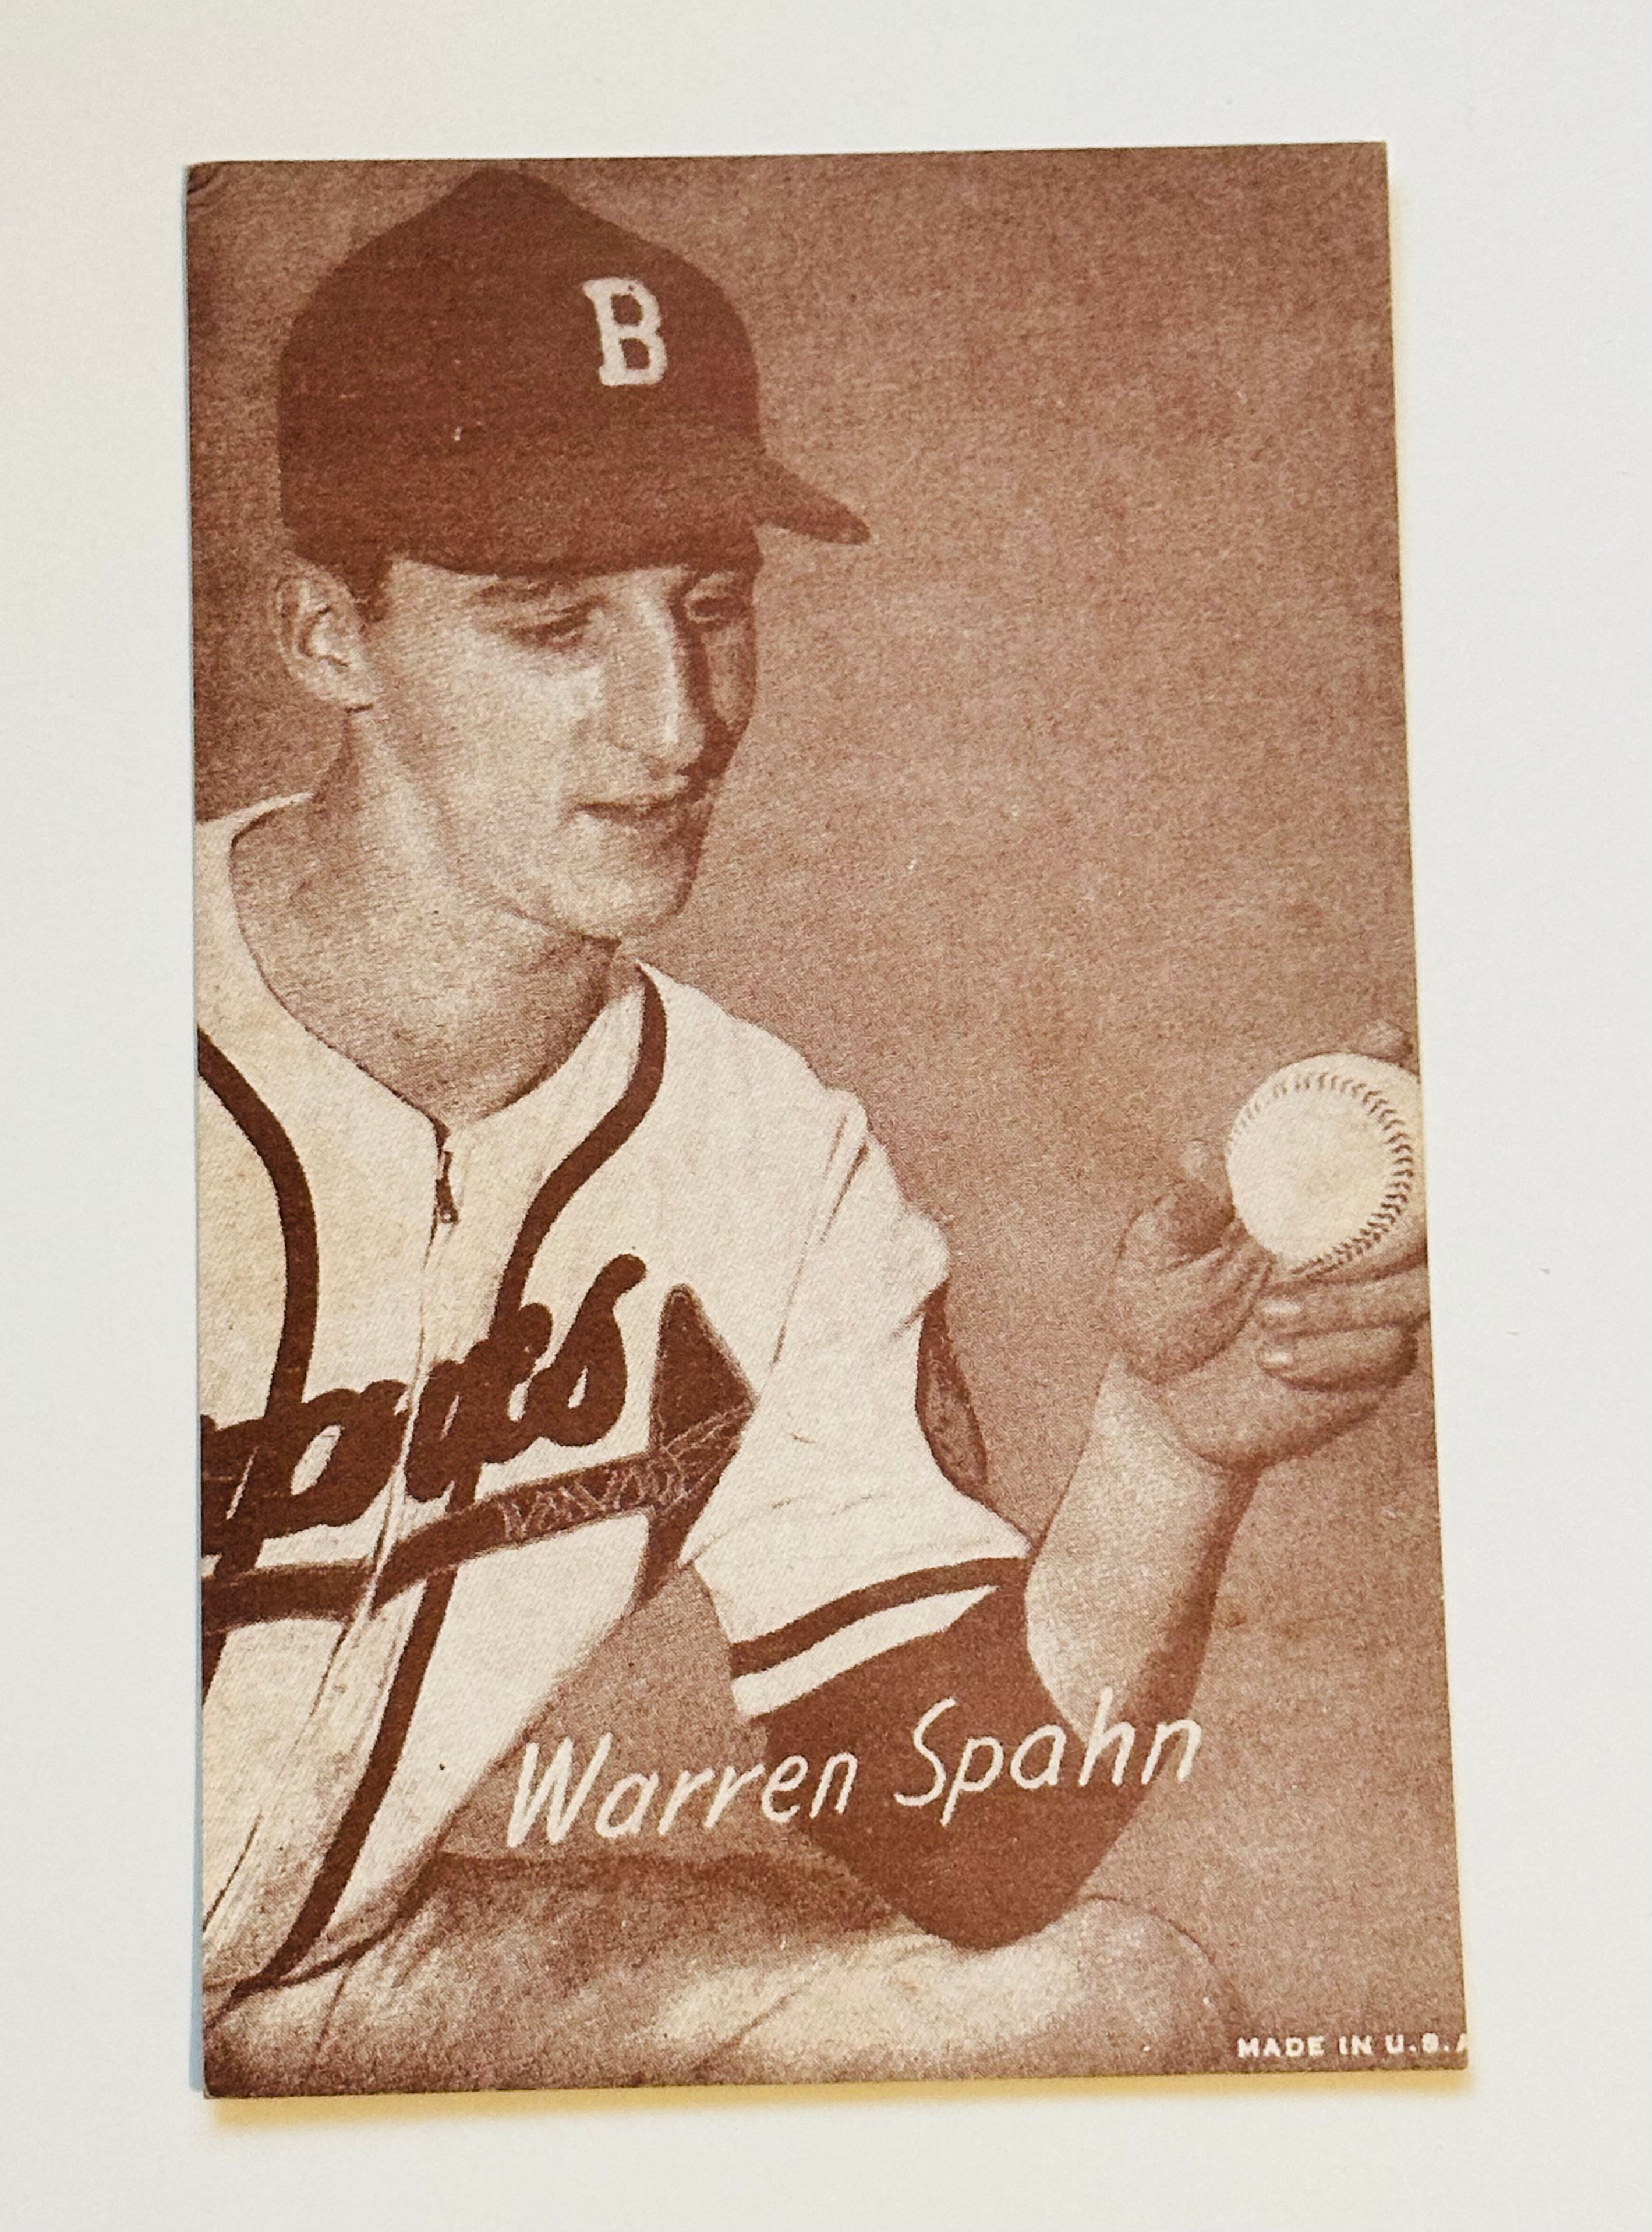 Warren Spahn rare exhibit baseball card 1947